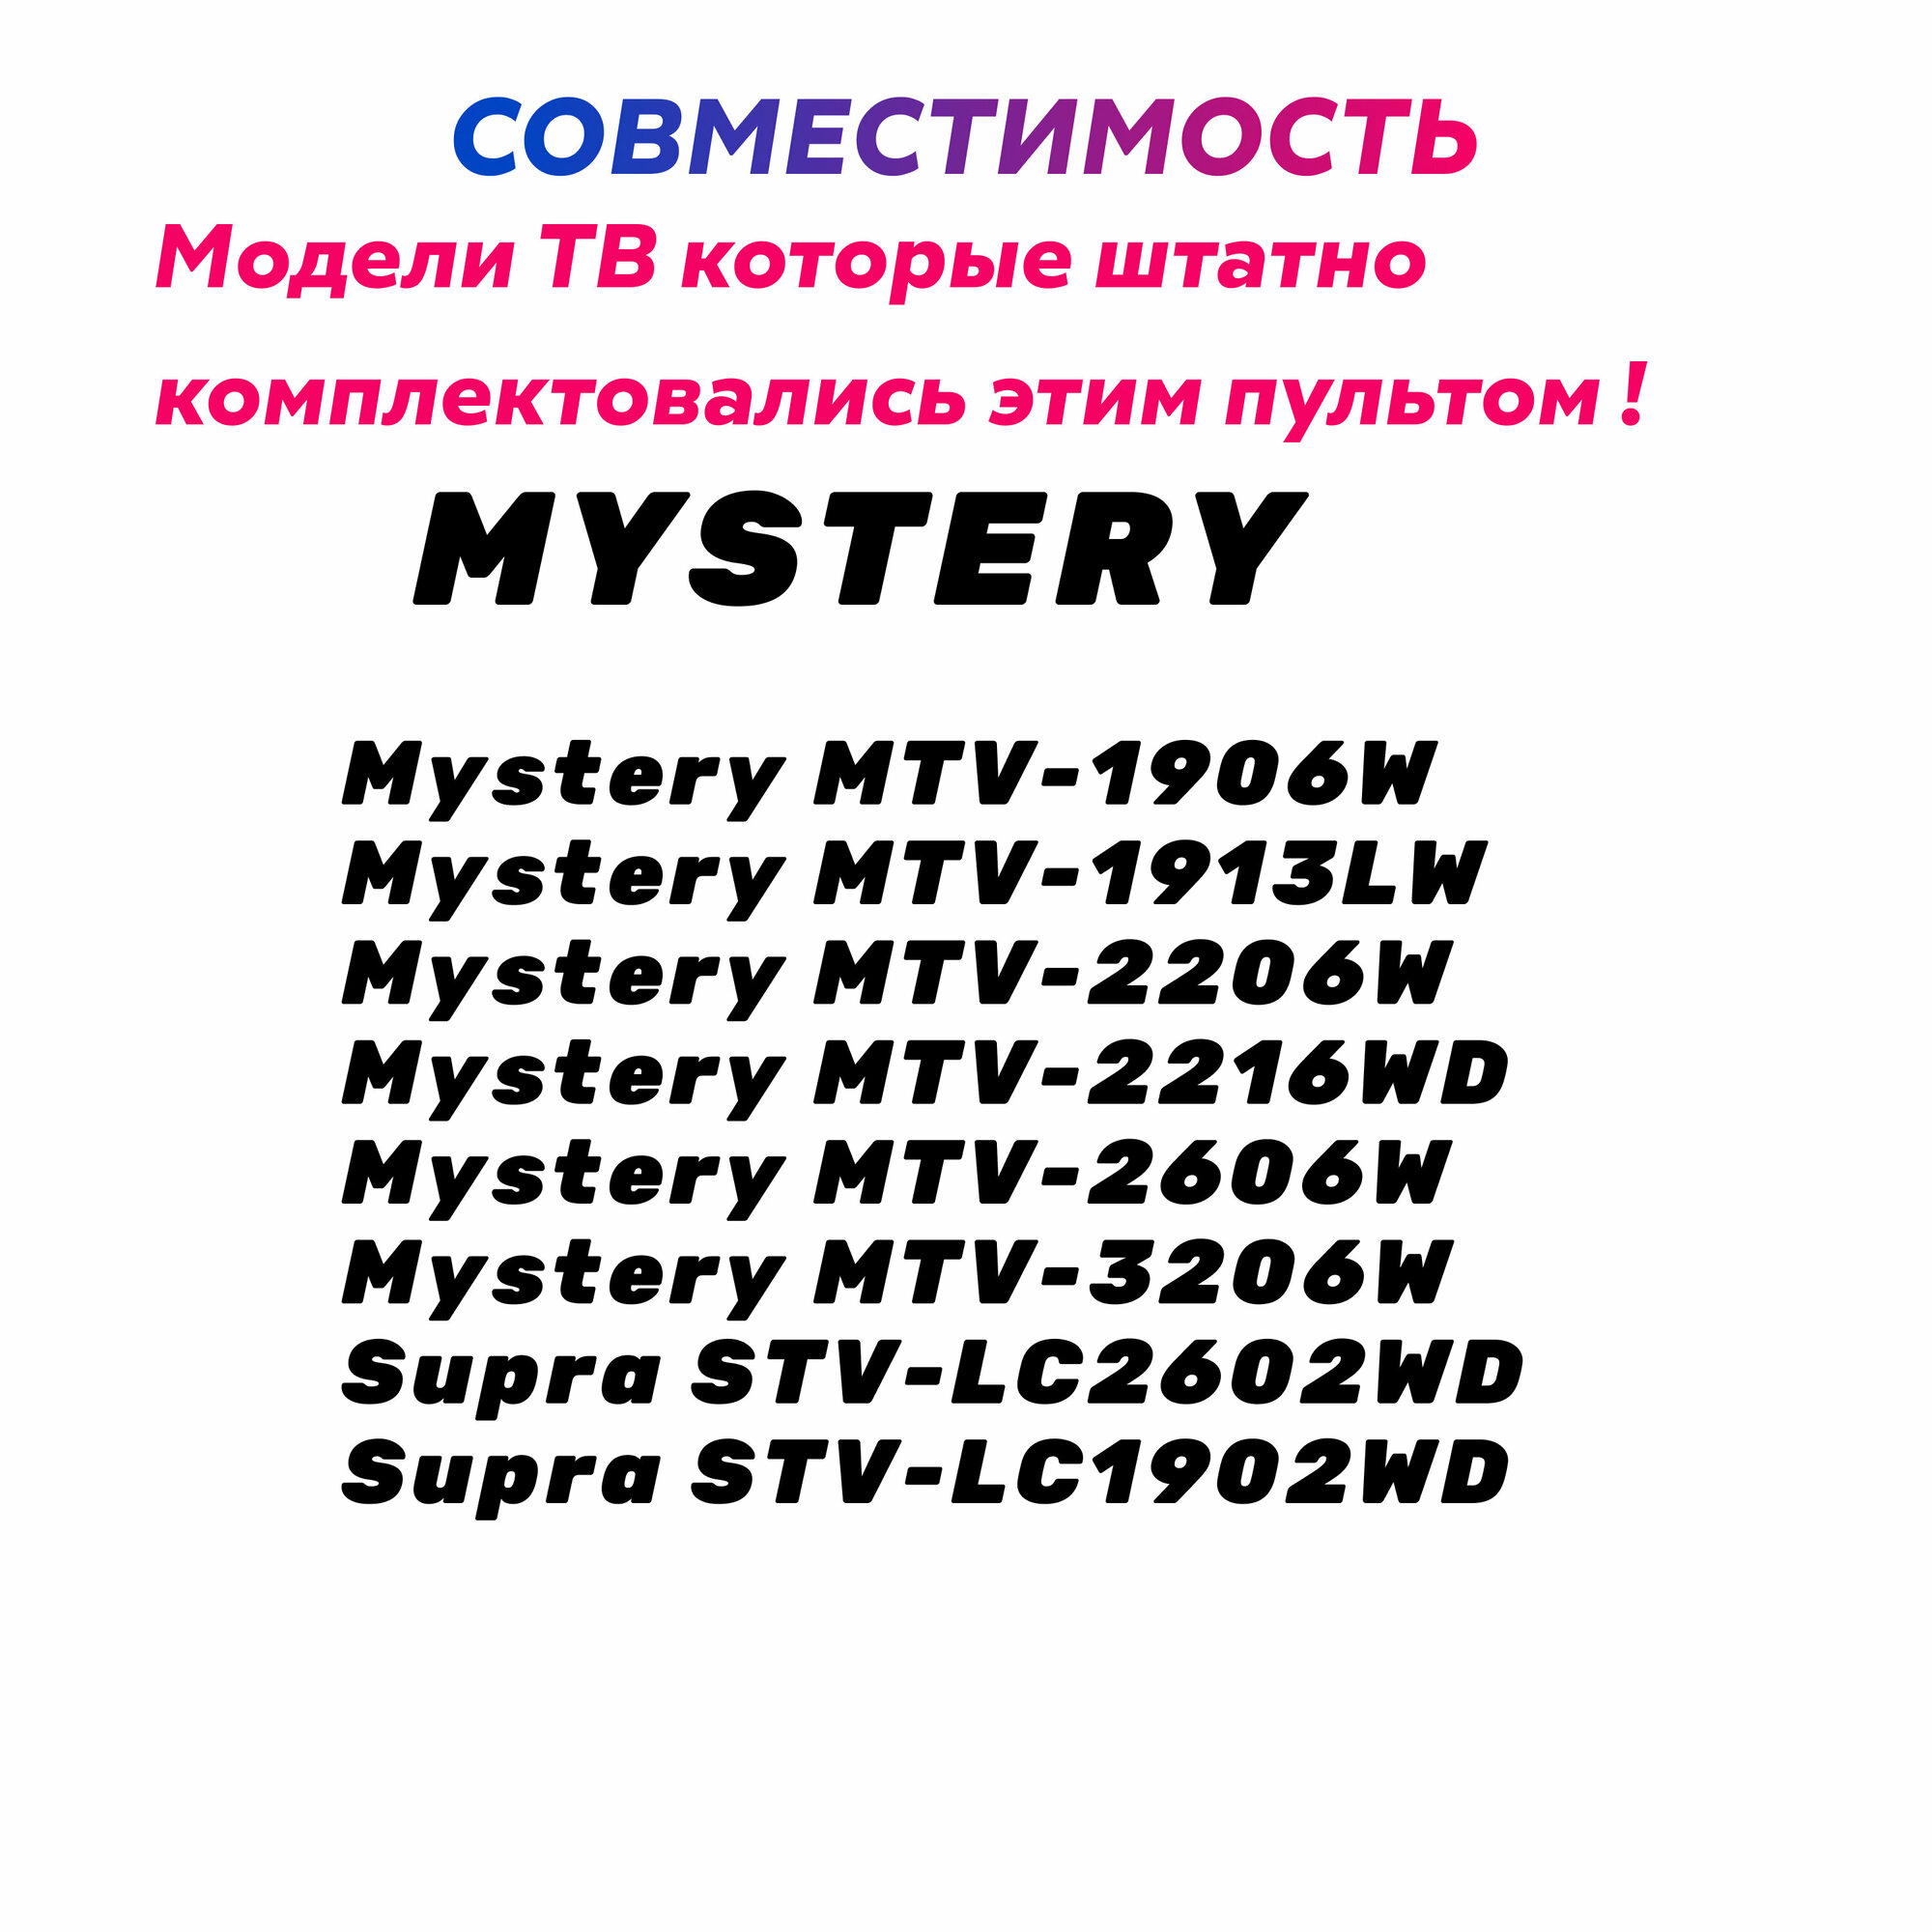 Пульт к Mystery KT-6957 (MTW3206W/1906W) TV/DVD